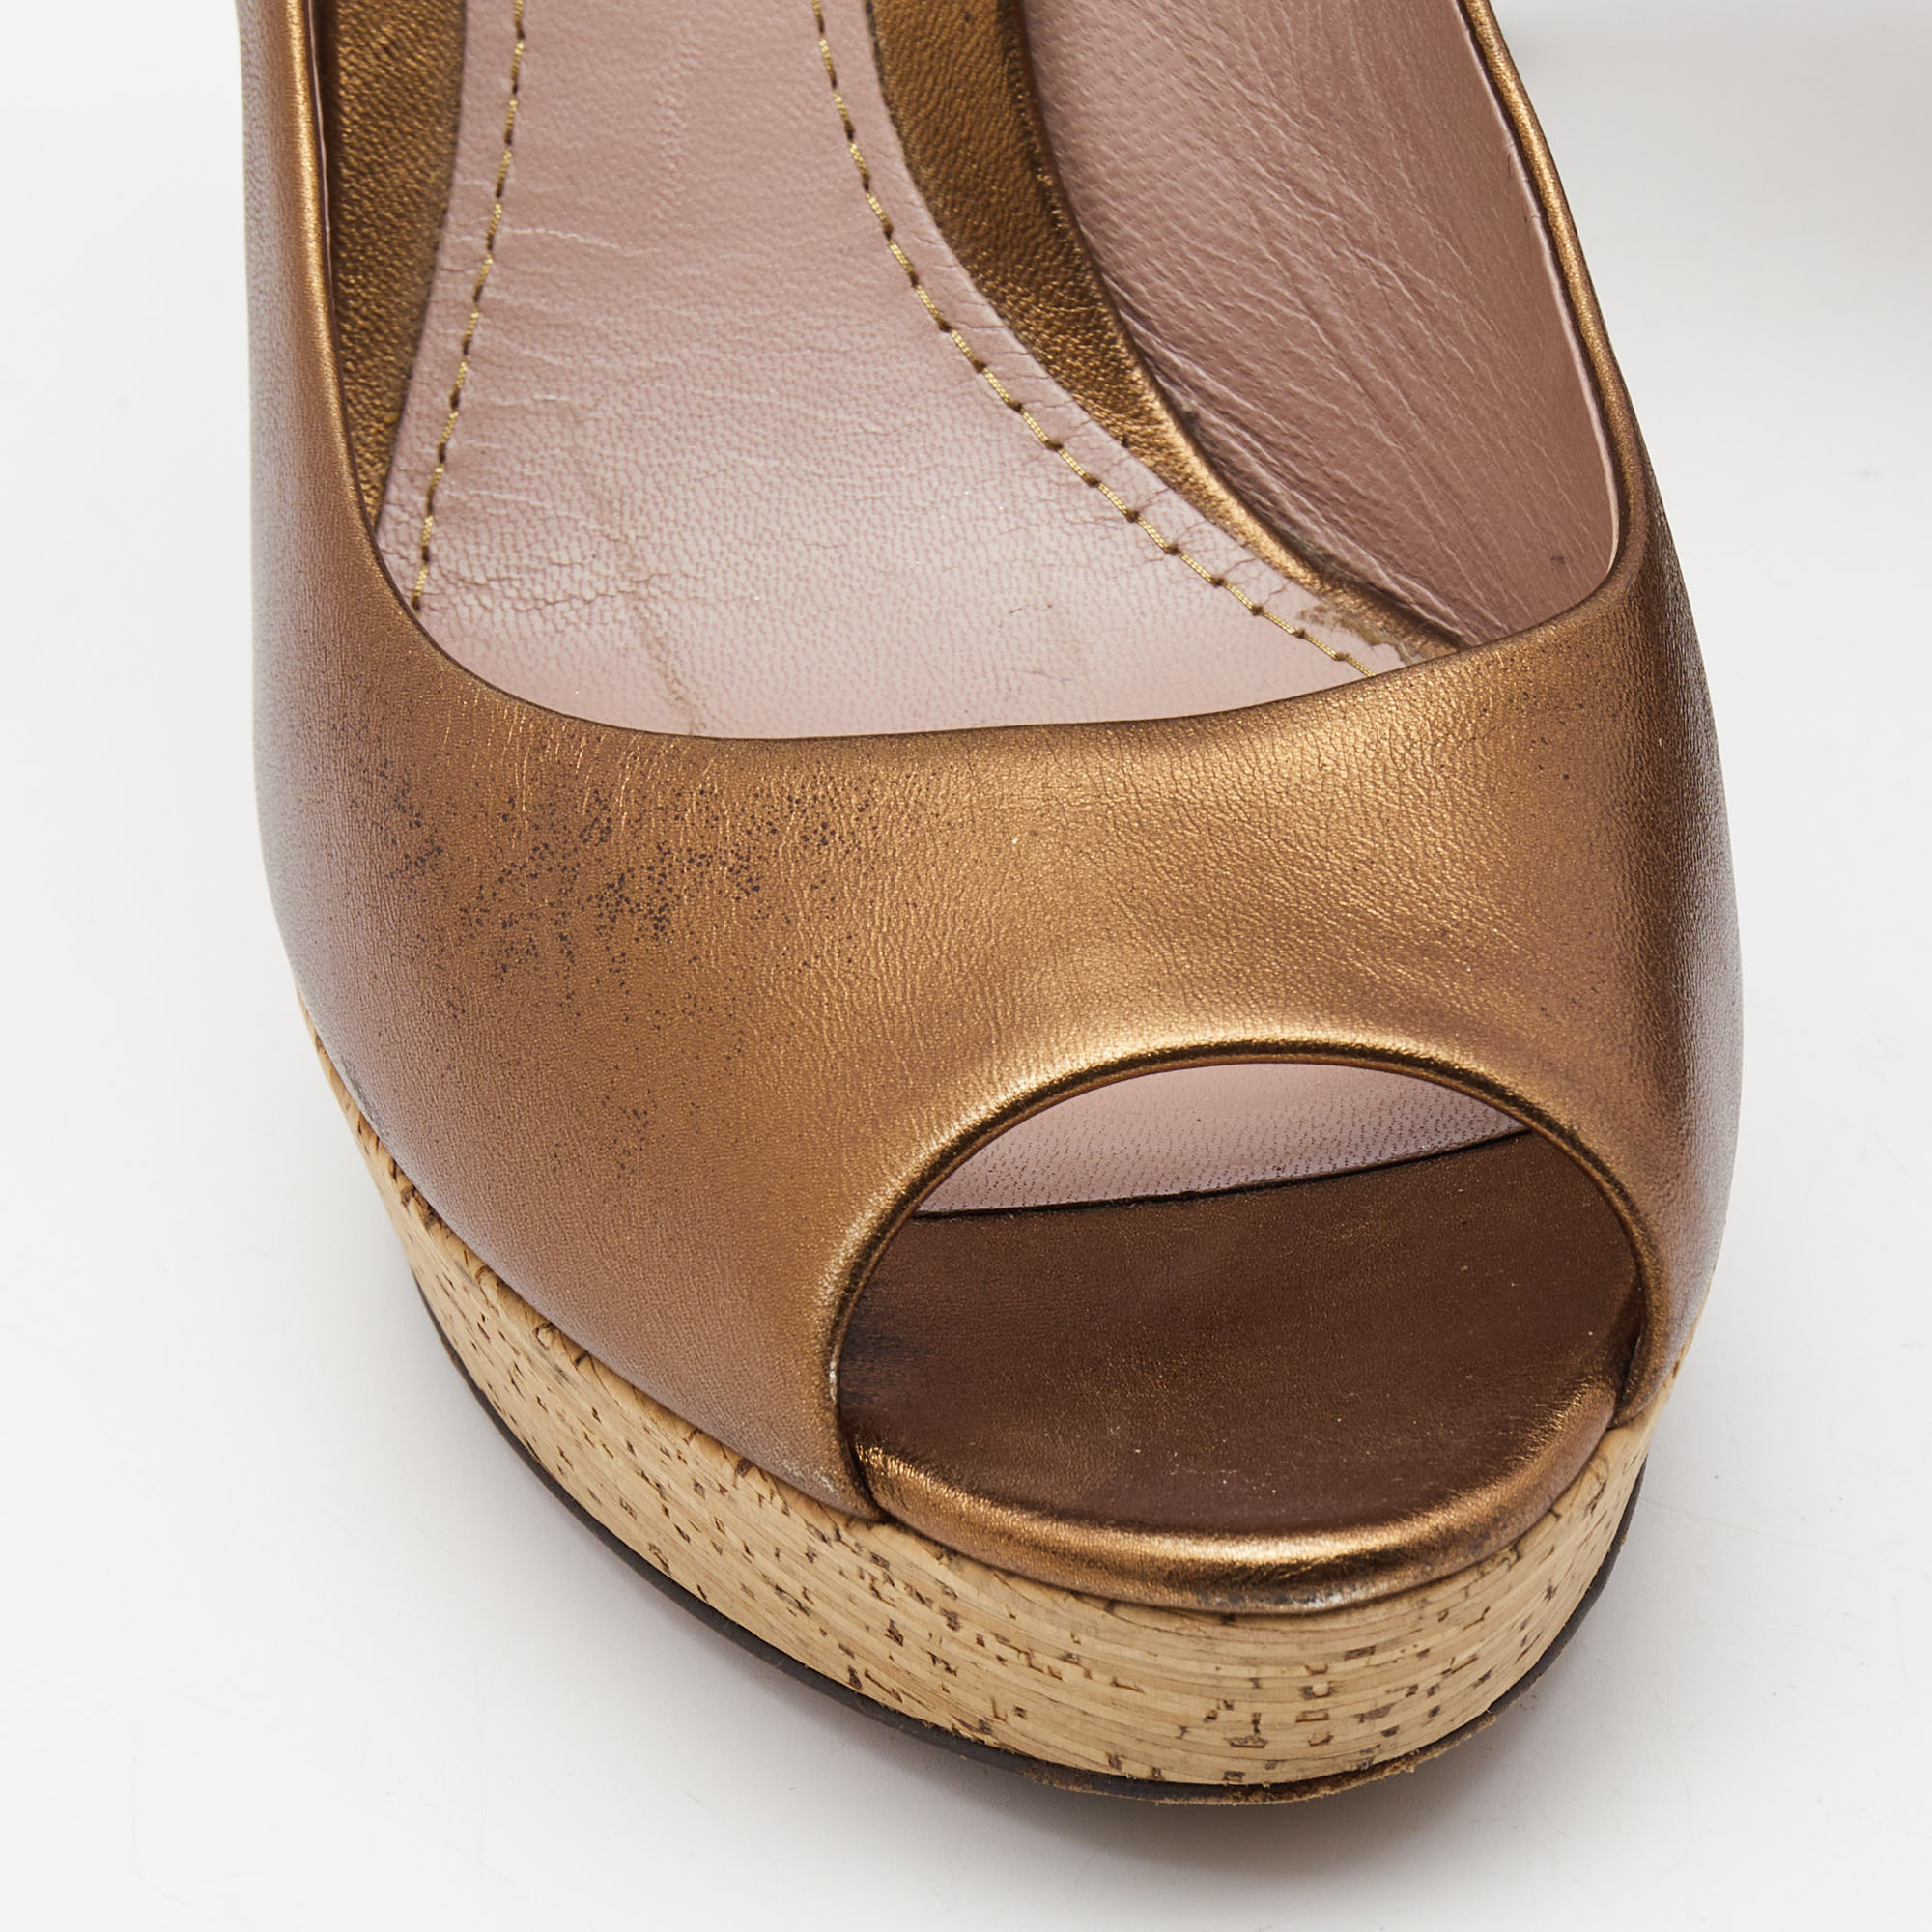 Gucci Metallic Bronze Leather Peep Toe Platform Pumps Size 39